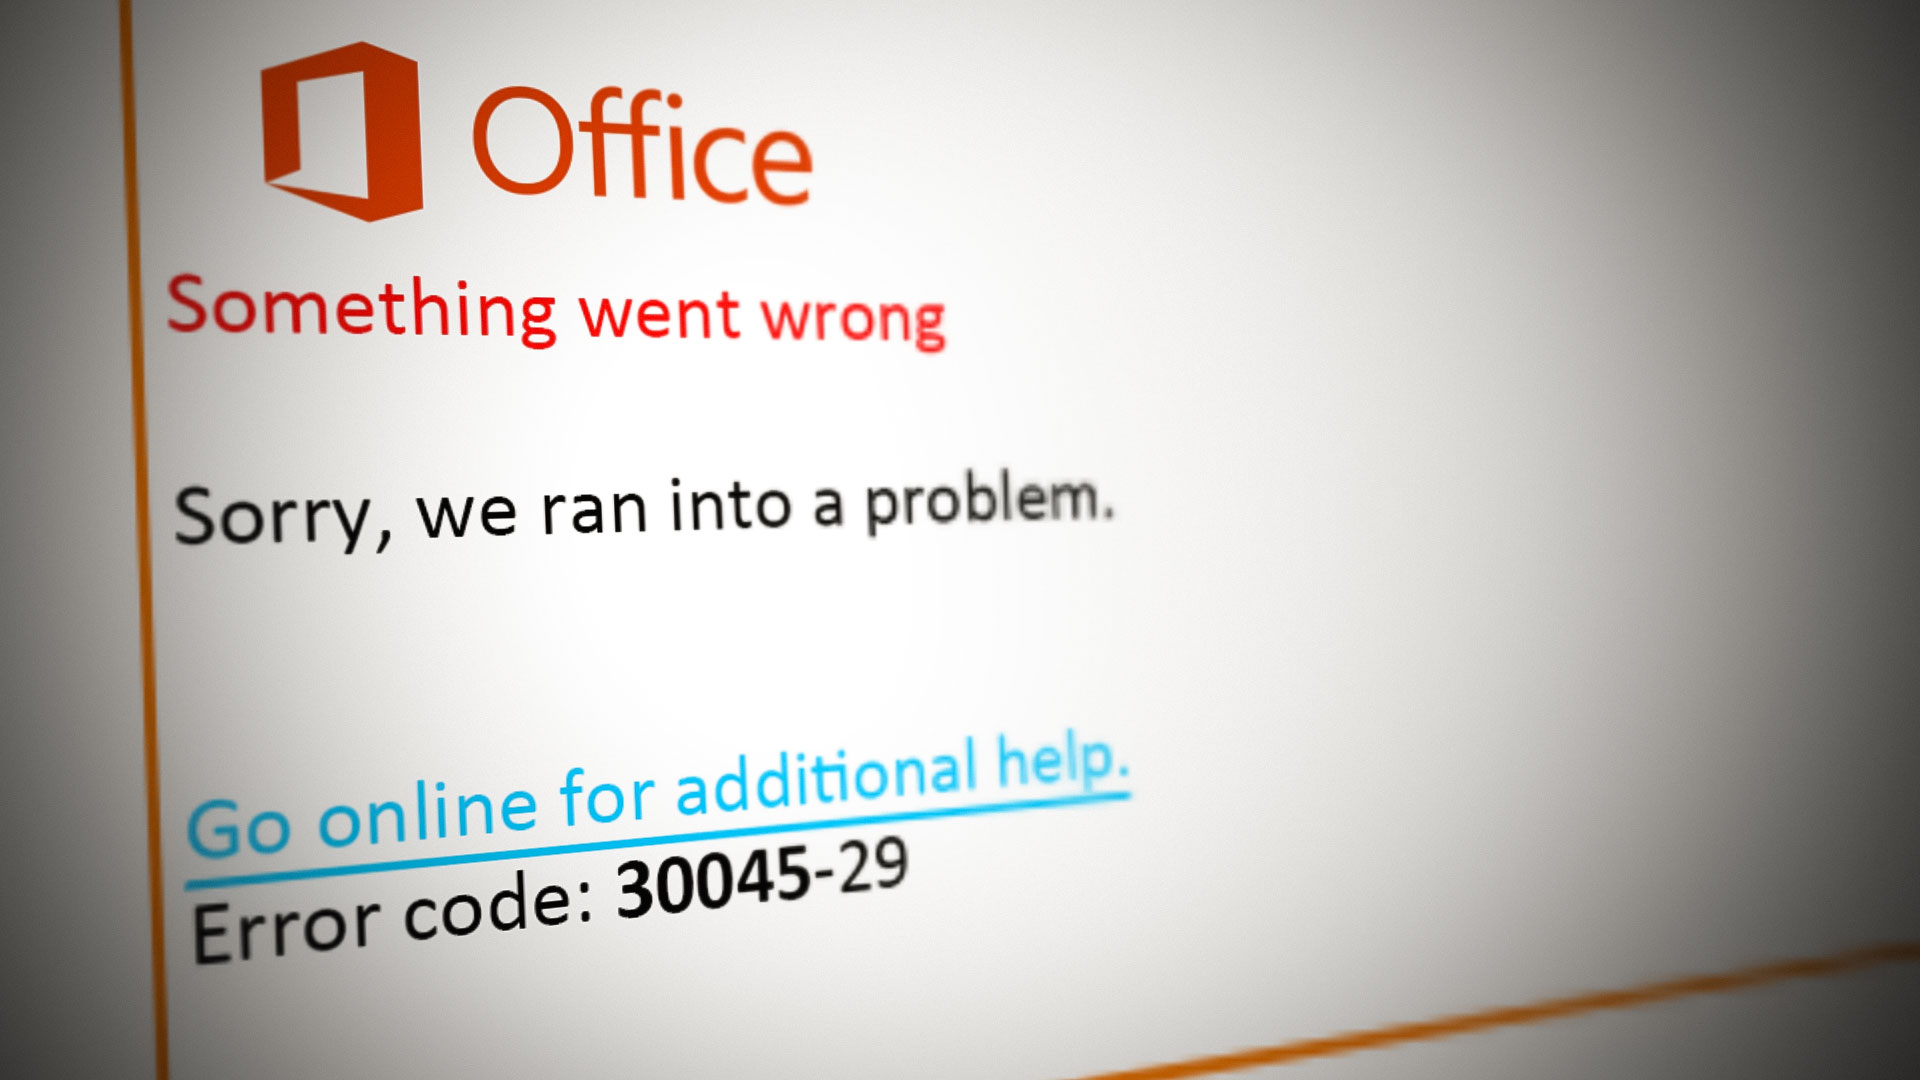 Error Code: 30045-29' Something Went Wrong on Microsoft Office